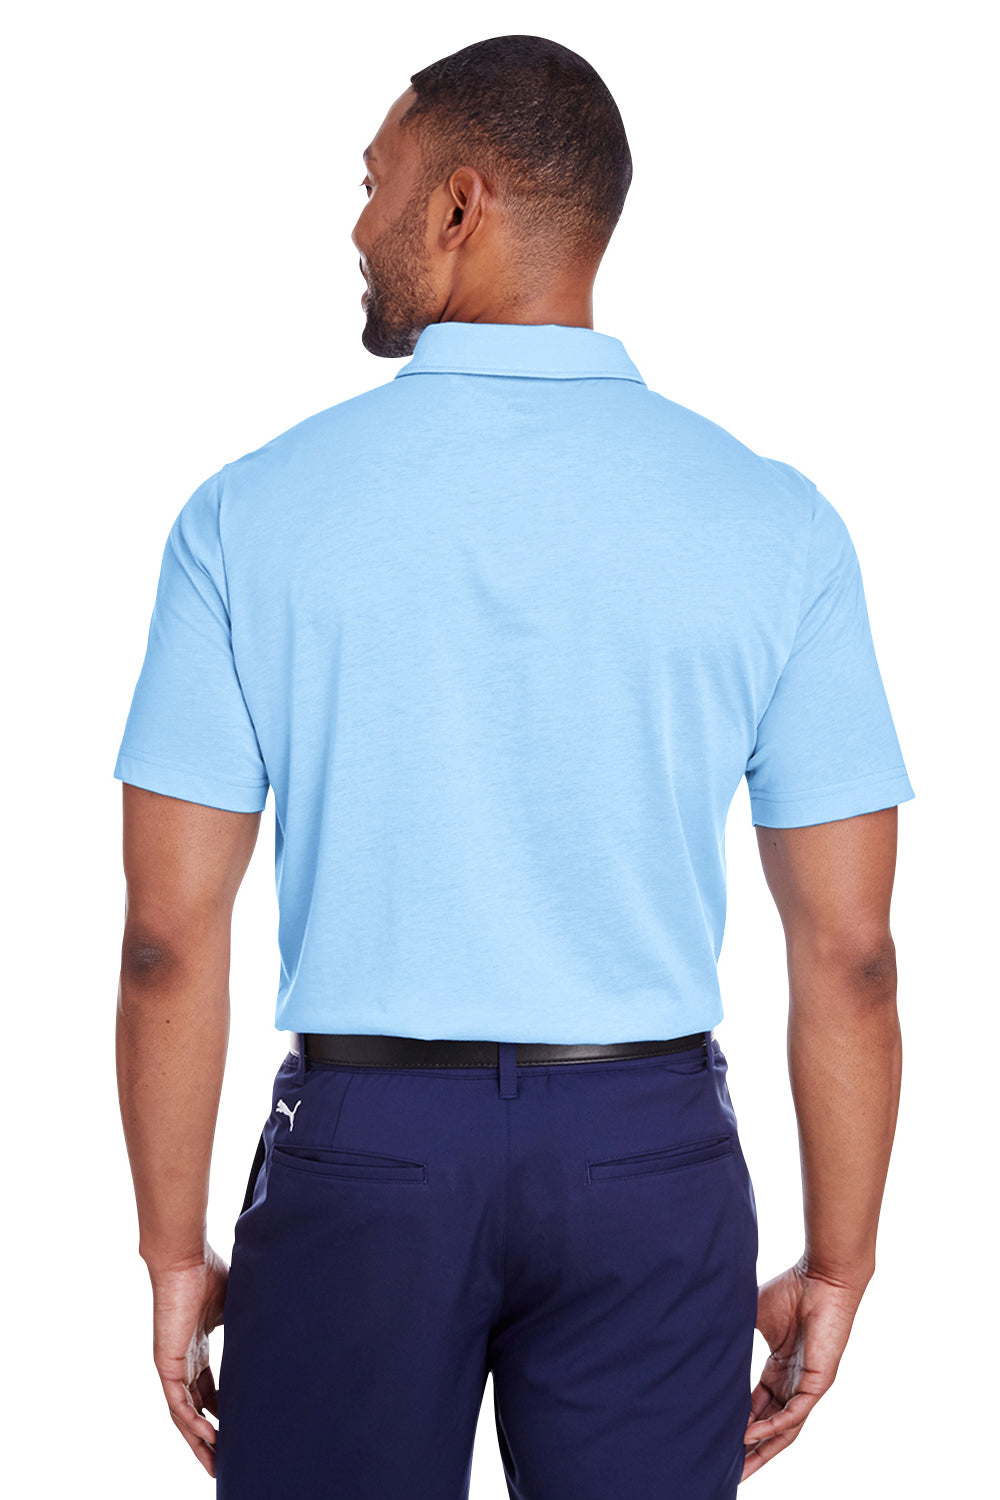 Puma 596920 Mens Fusion Performance Moisture Wicking Short Sleeve Polo Shirt Columbia Blue Back